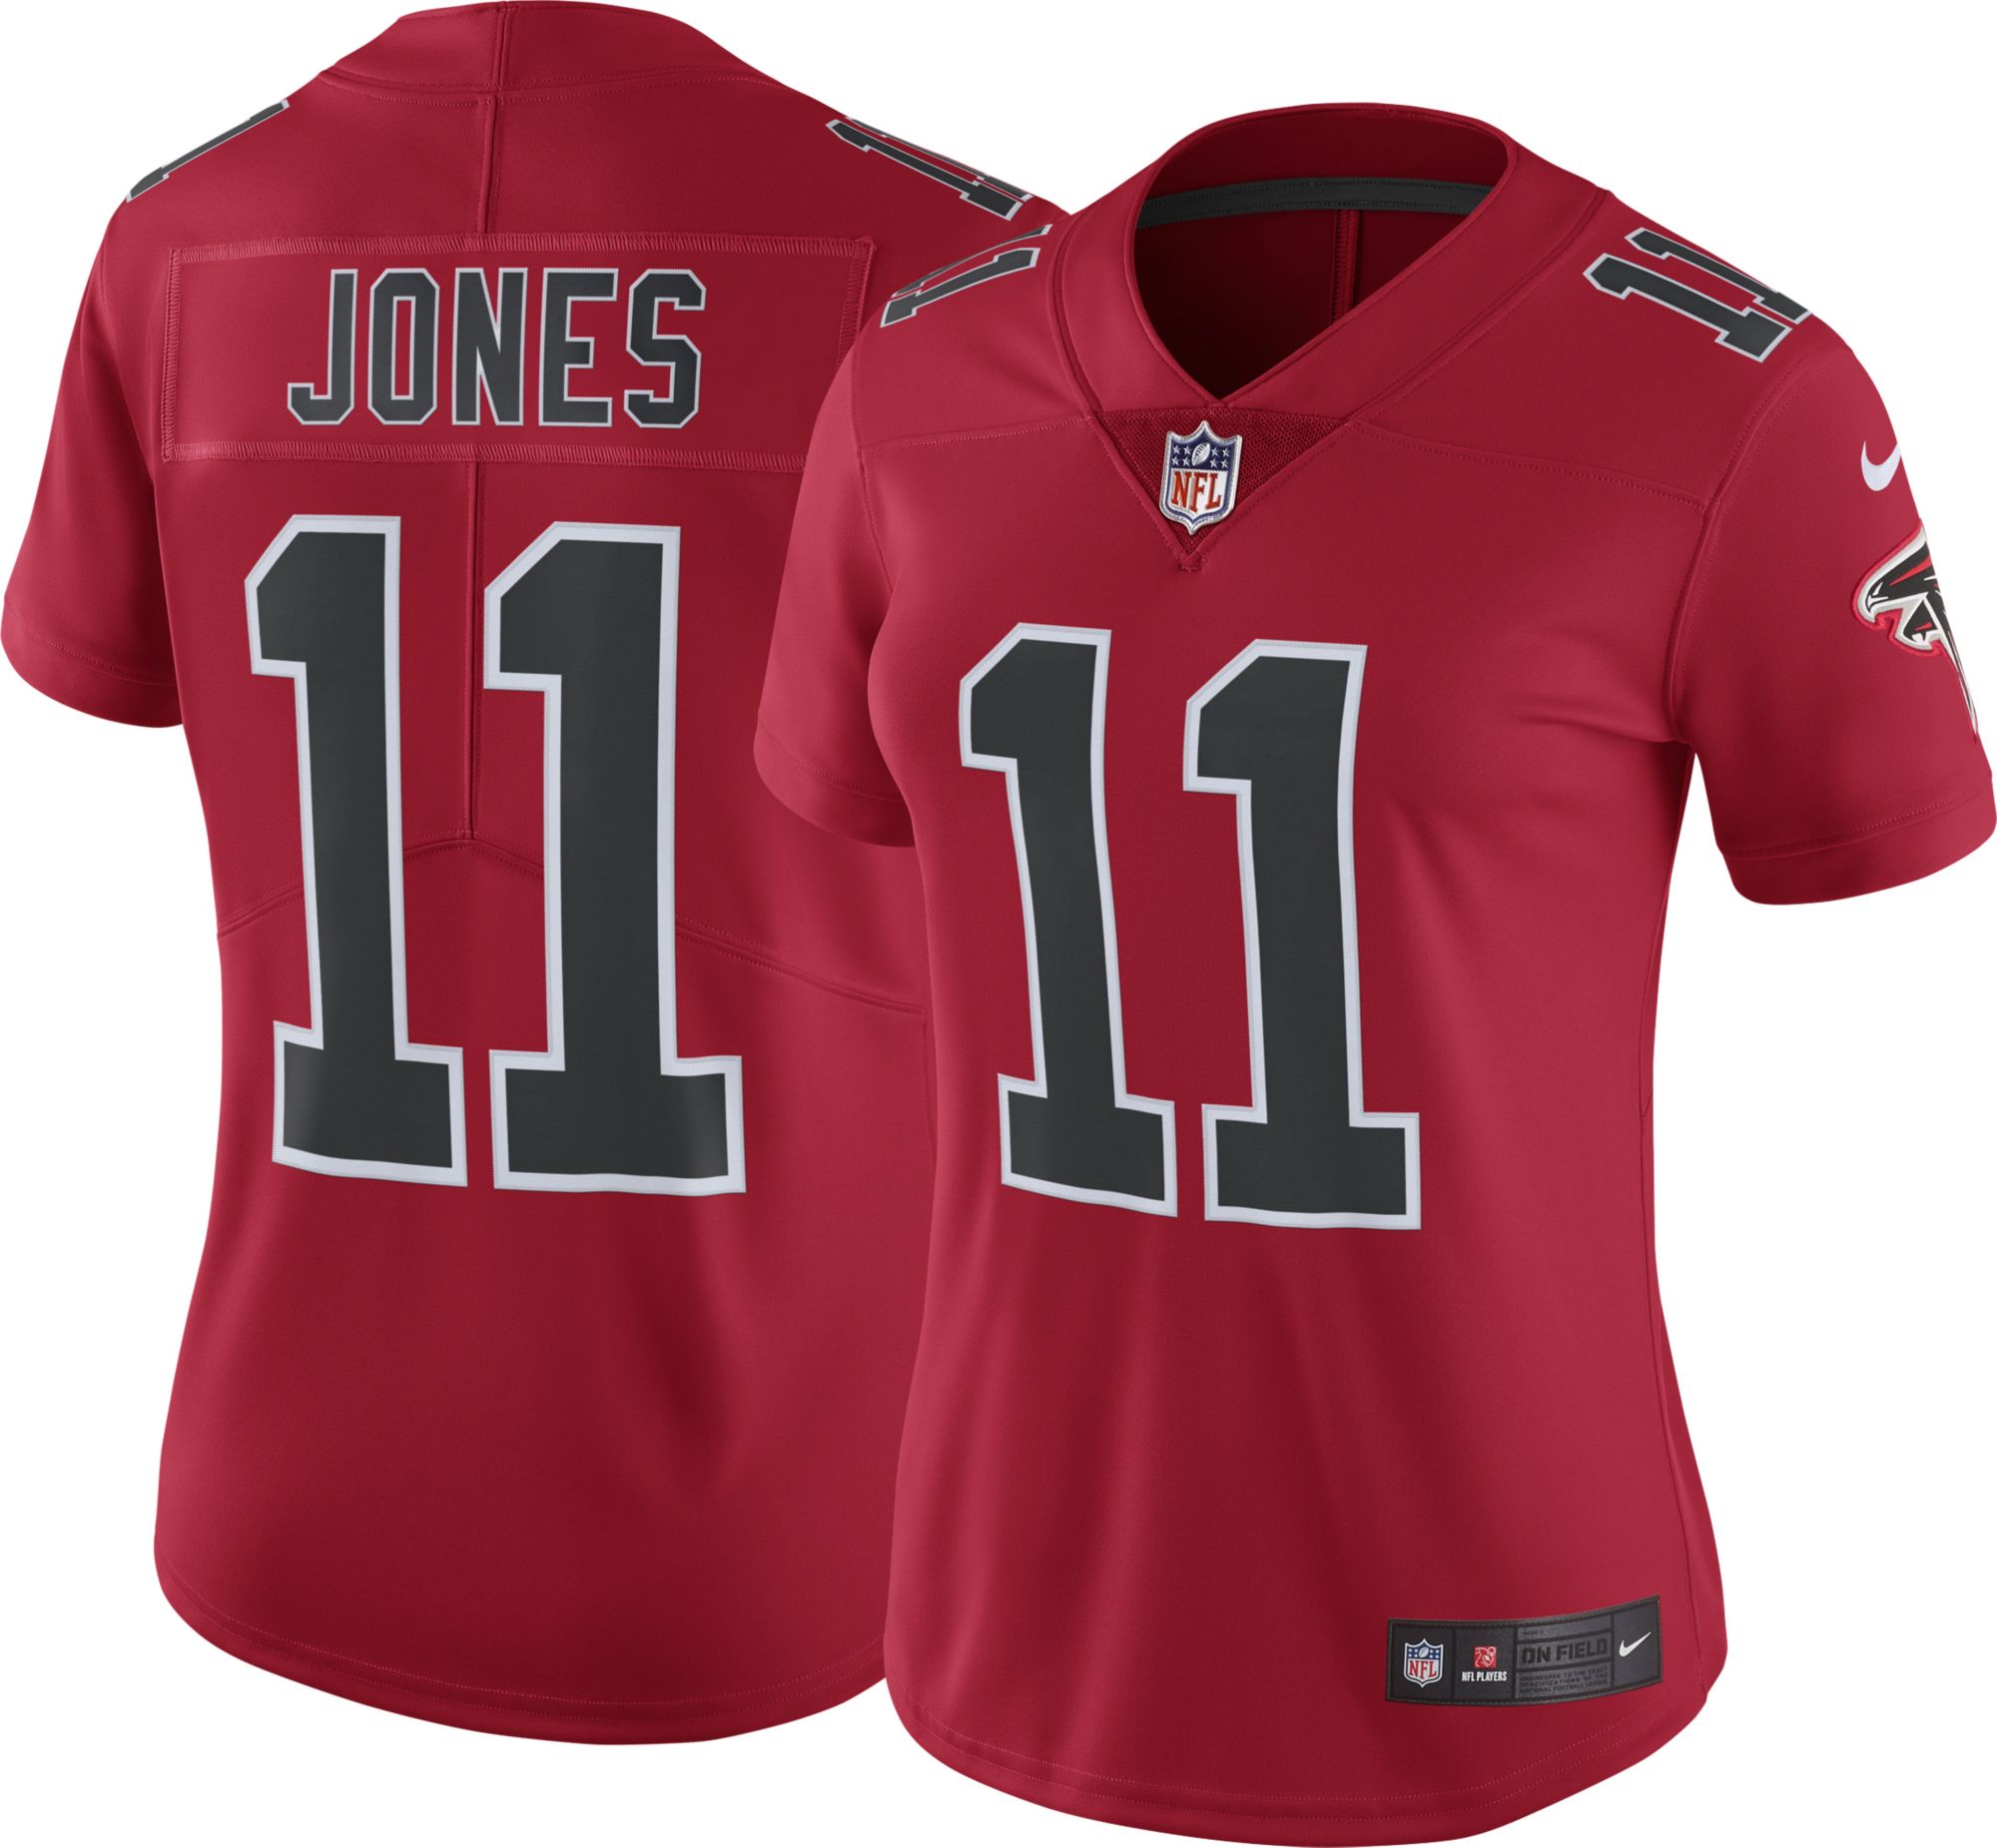 julio jones limited jersey